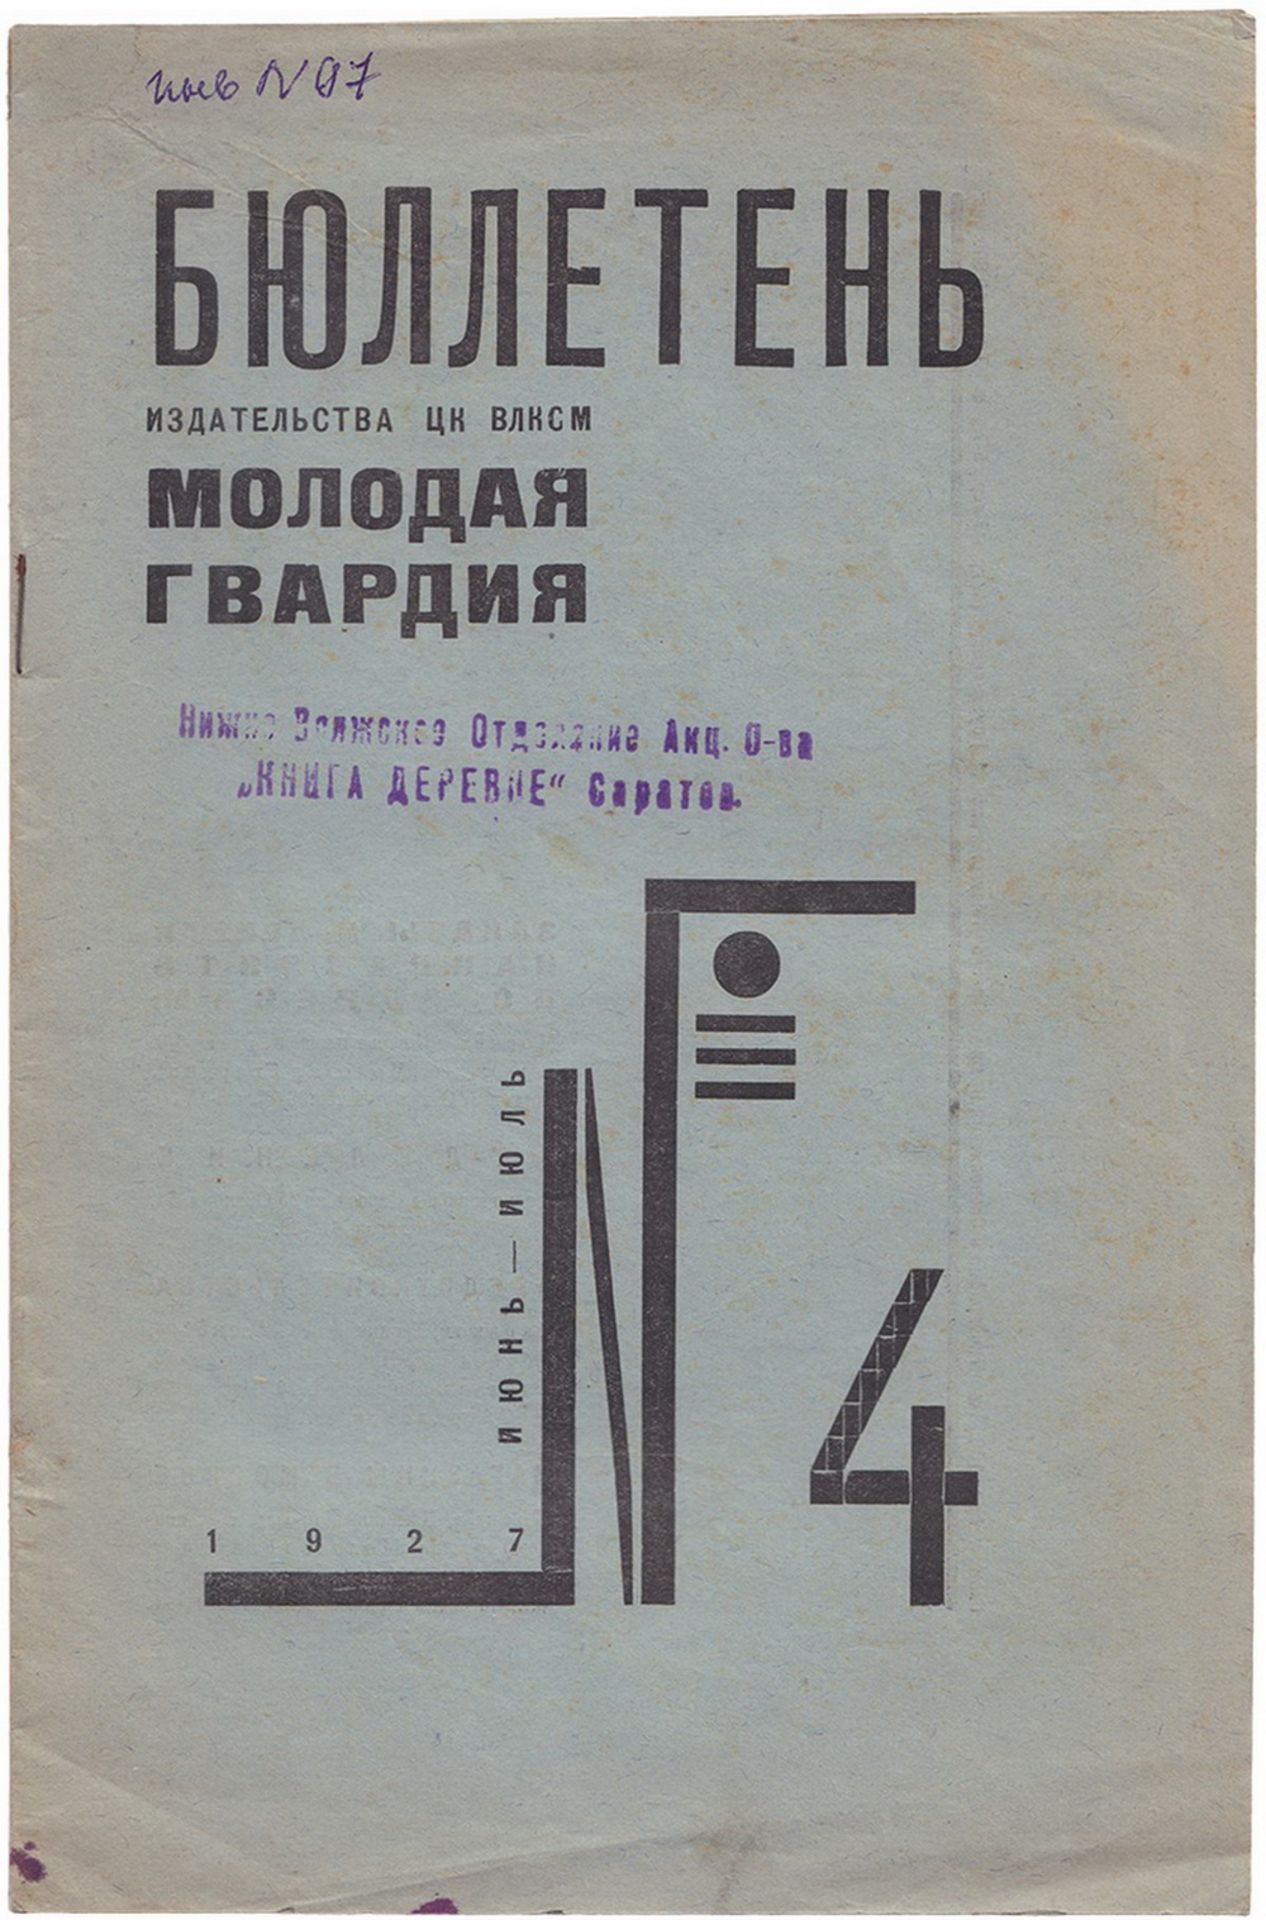 [Solomon Telingater, design. Soviet constructivism]. Molodaya Gvardiya [Young Guard] publisher house